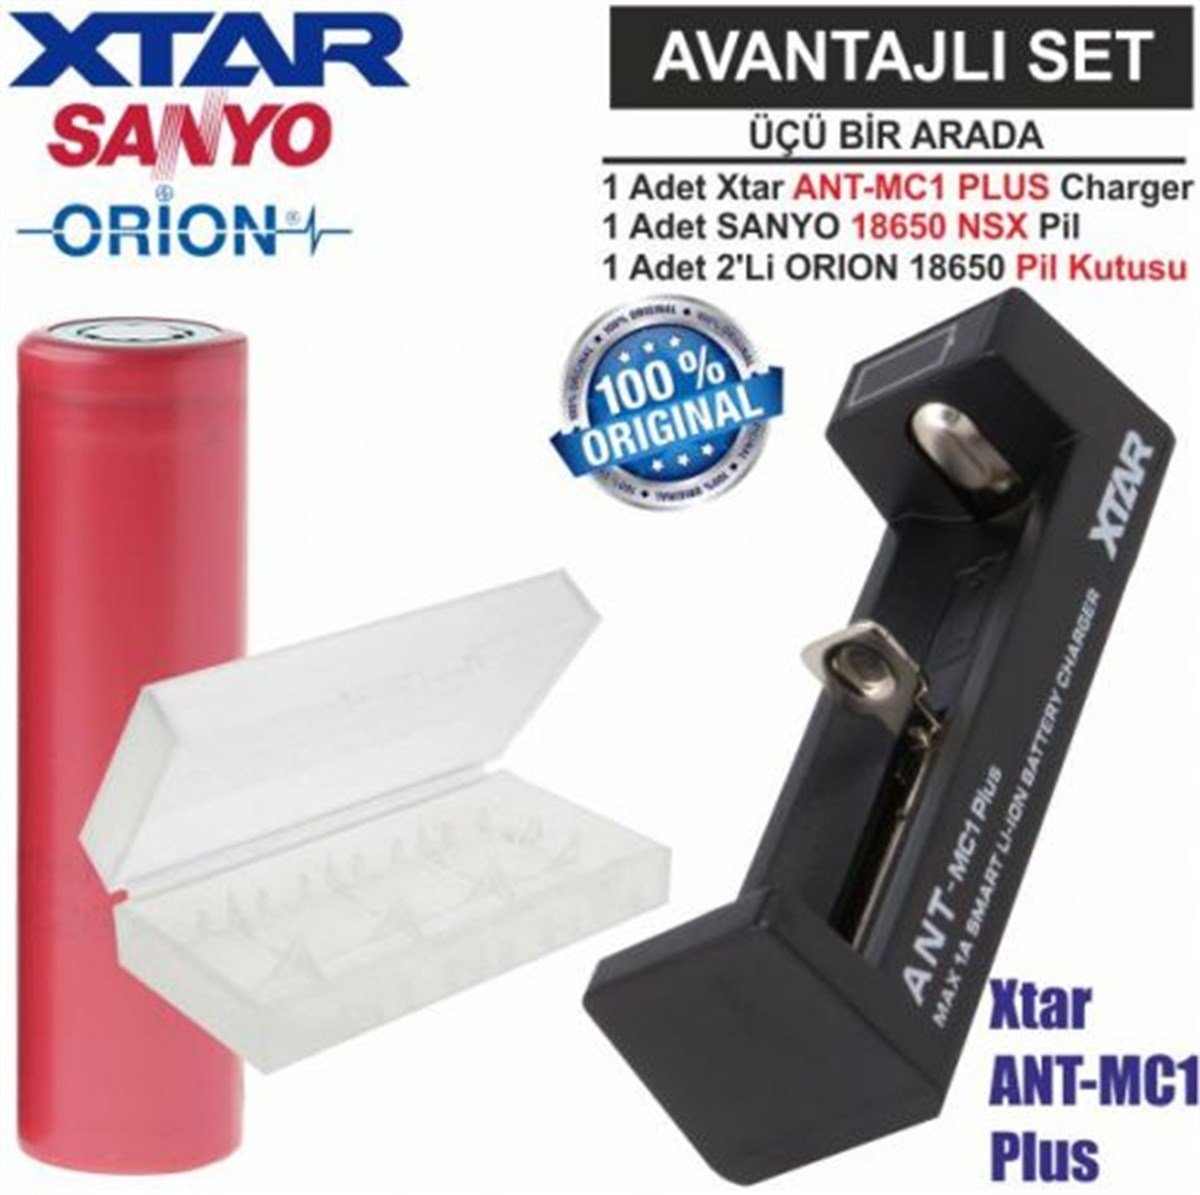 Xtar ANT-MC1 Plus Şarj Aleti, Sanyo UR18650BF Li-ion Pil, ORION 18650 Pil  taşıma kutusu / 3'Lü SET | PilSitesi.com